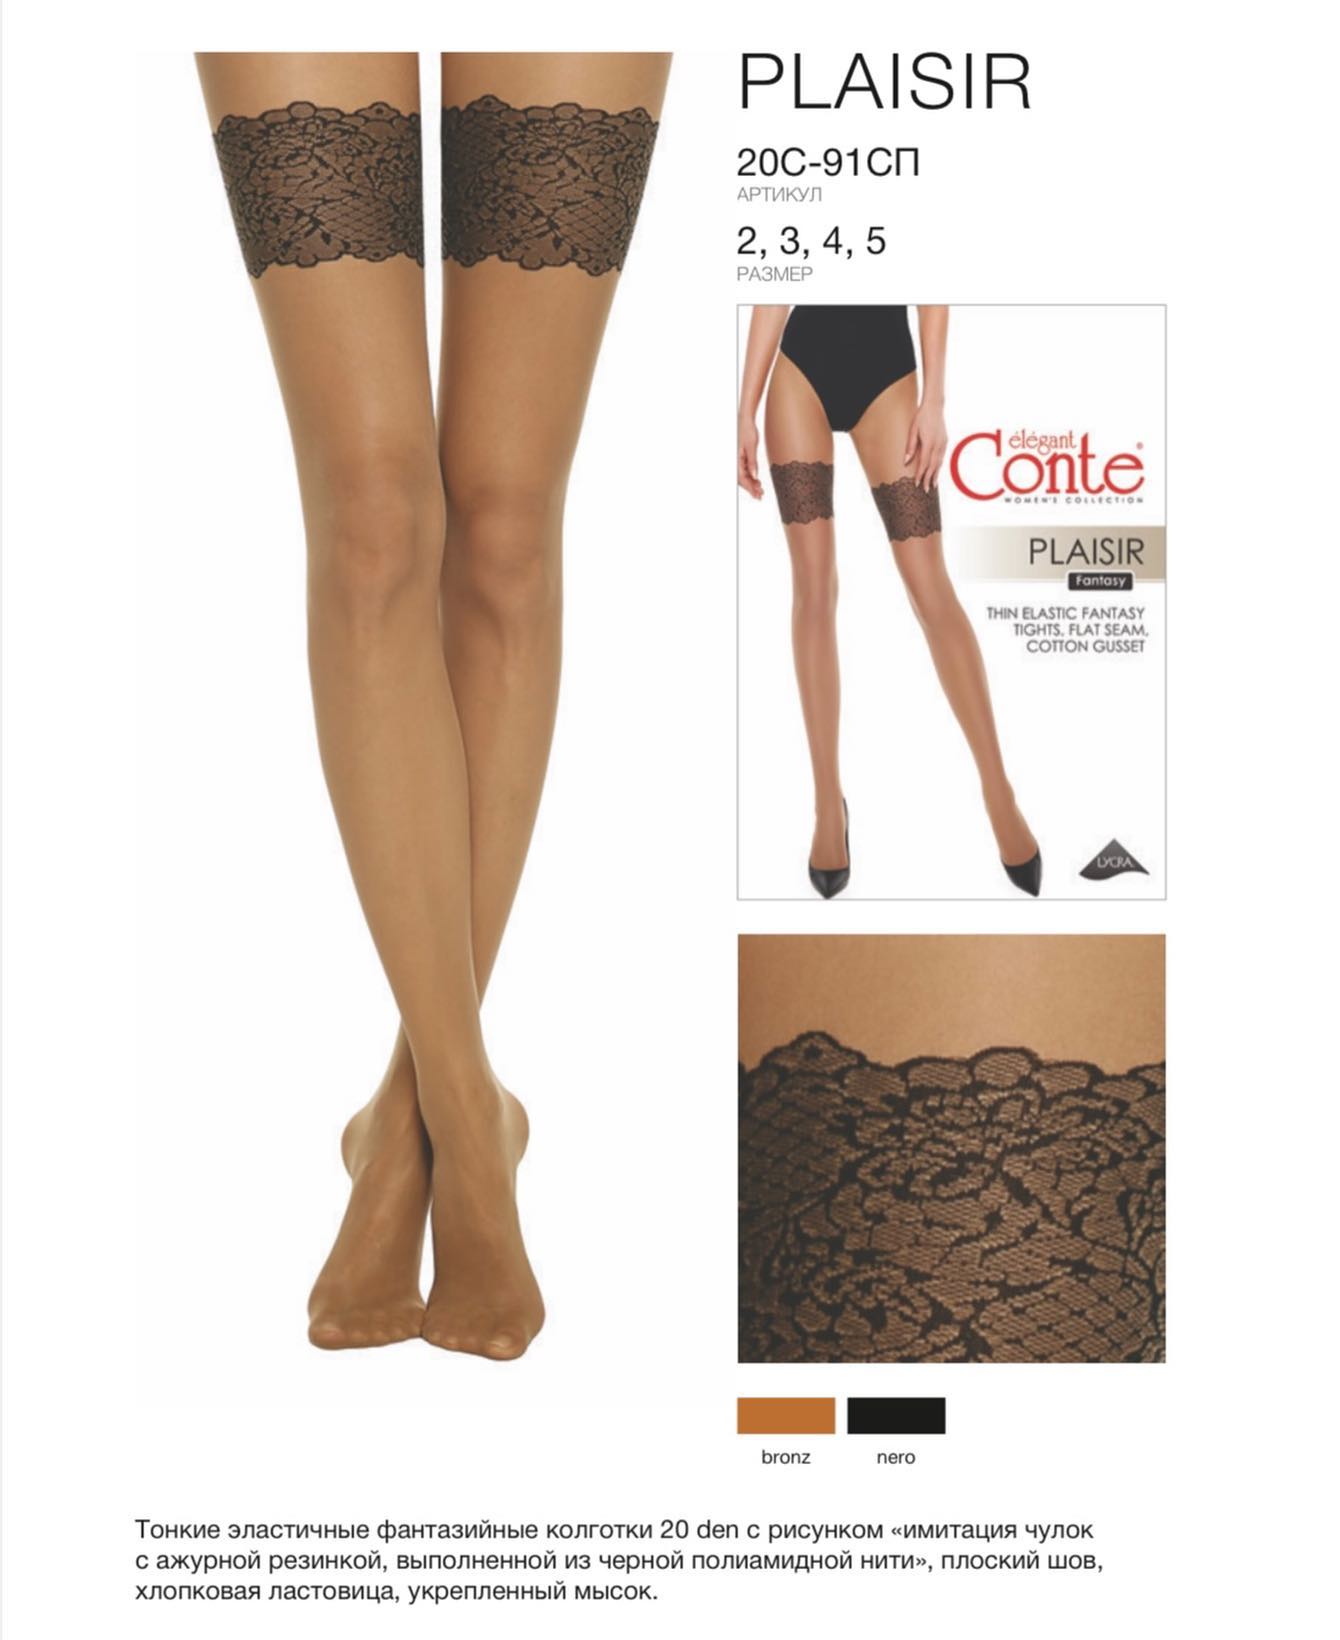 Conte Plaisir 20 Den - Fantasy Women's Tights with imitation stockings (20С-91СП)